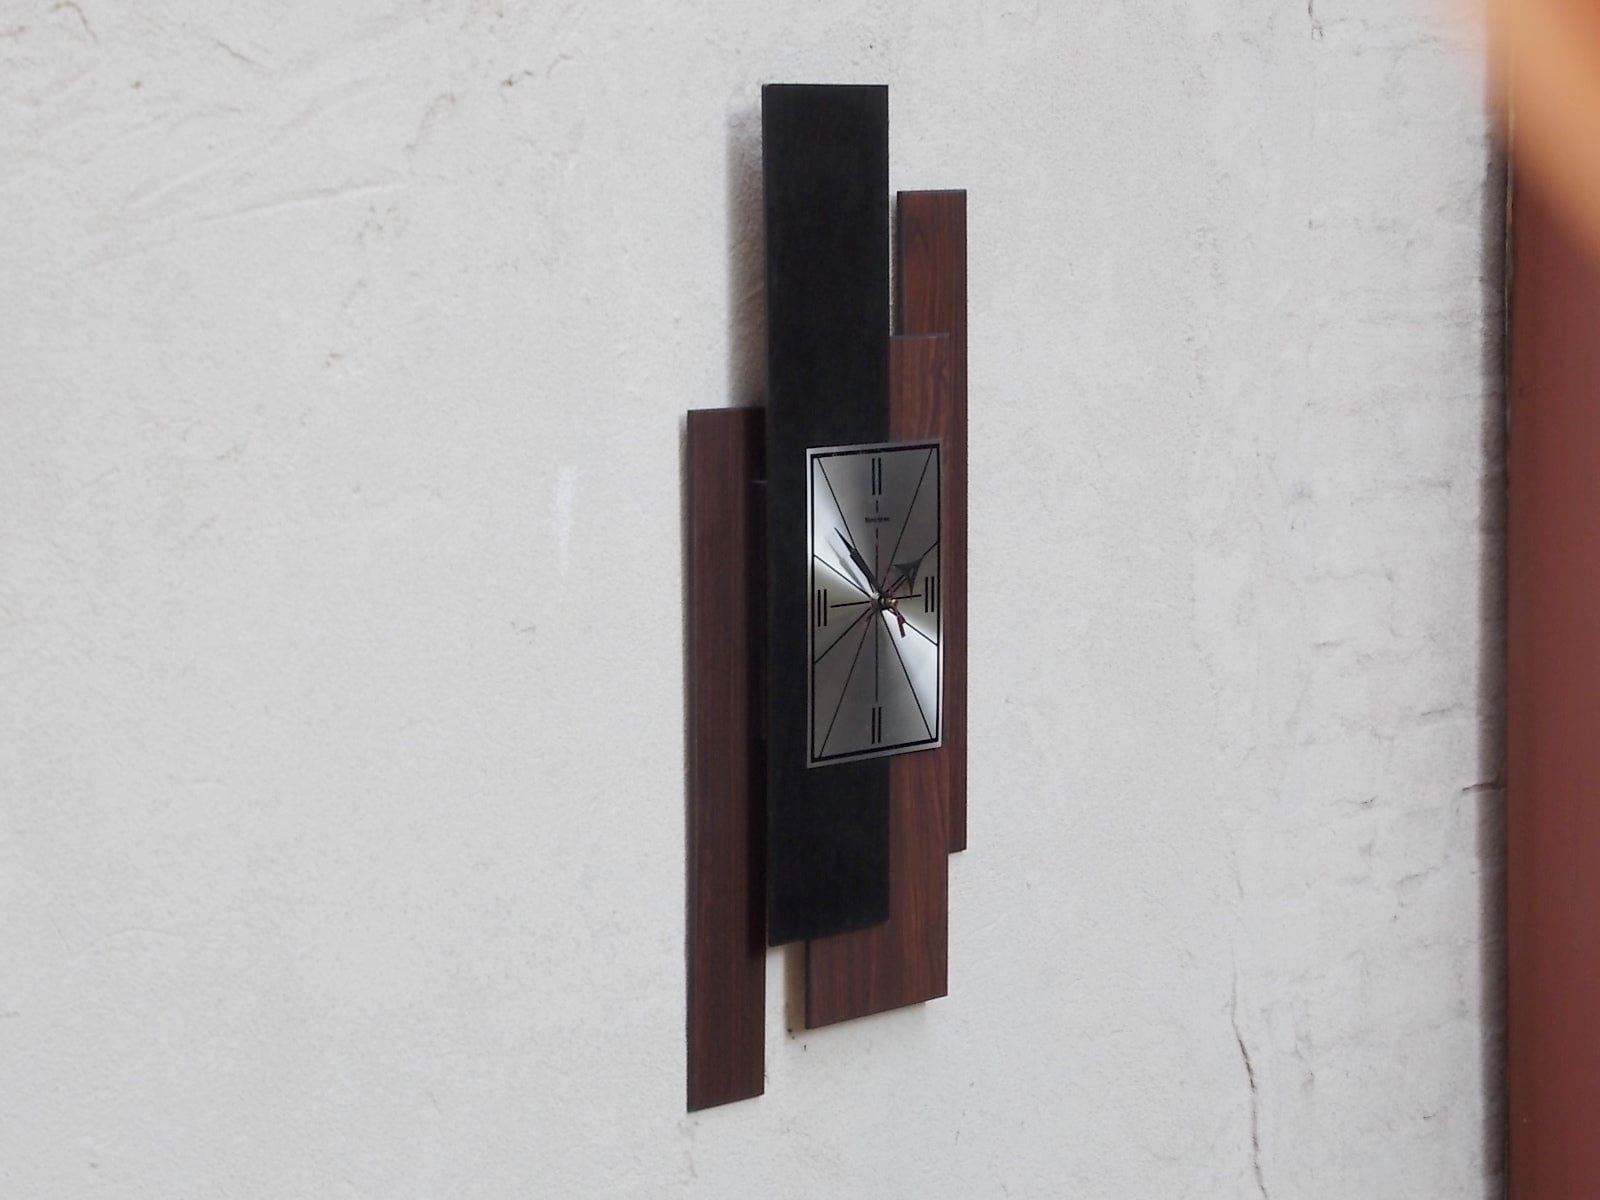 I Like Mikes Mid Century Modern Wall Clocks Mid Century Modern Wood and Black Wall Clock by Verichone